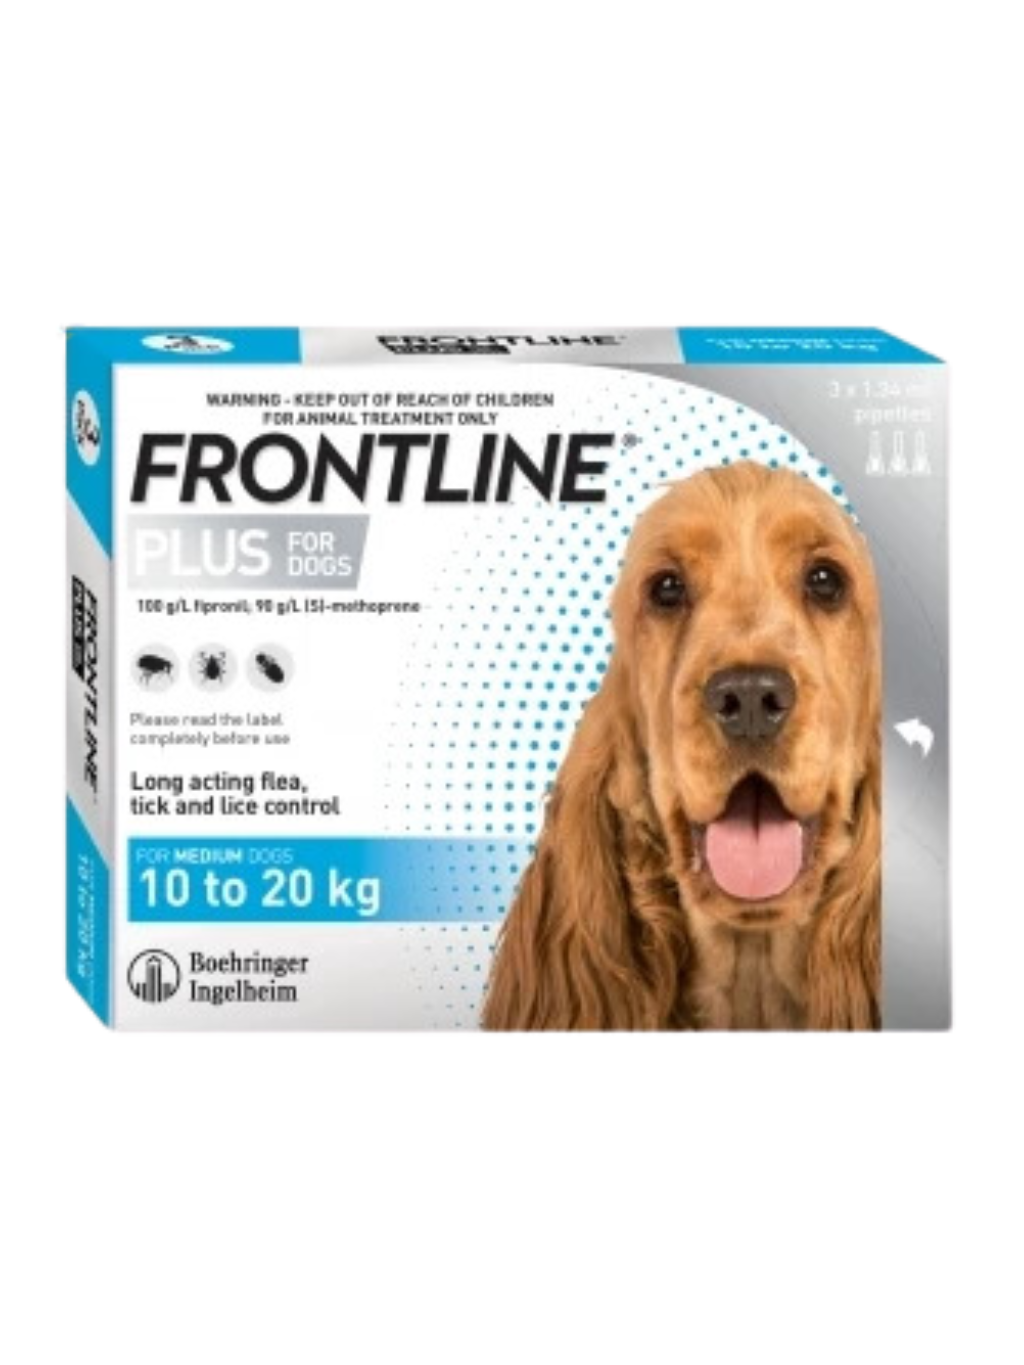 Frontline Plus | 狗狗殺蚤滴頸劑（任選兩件85折）